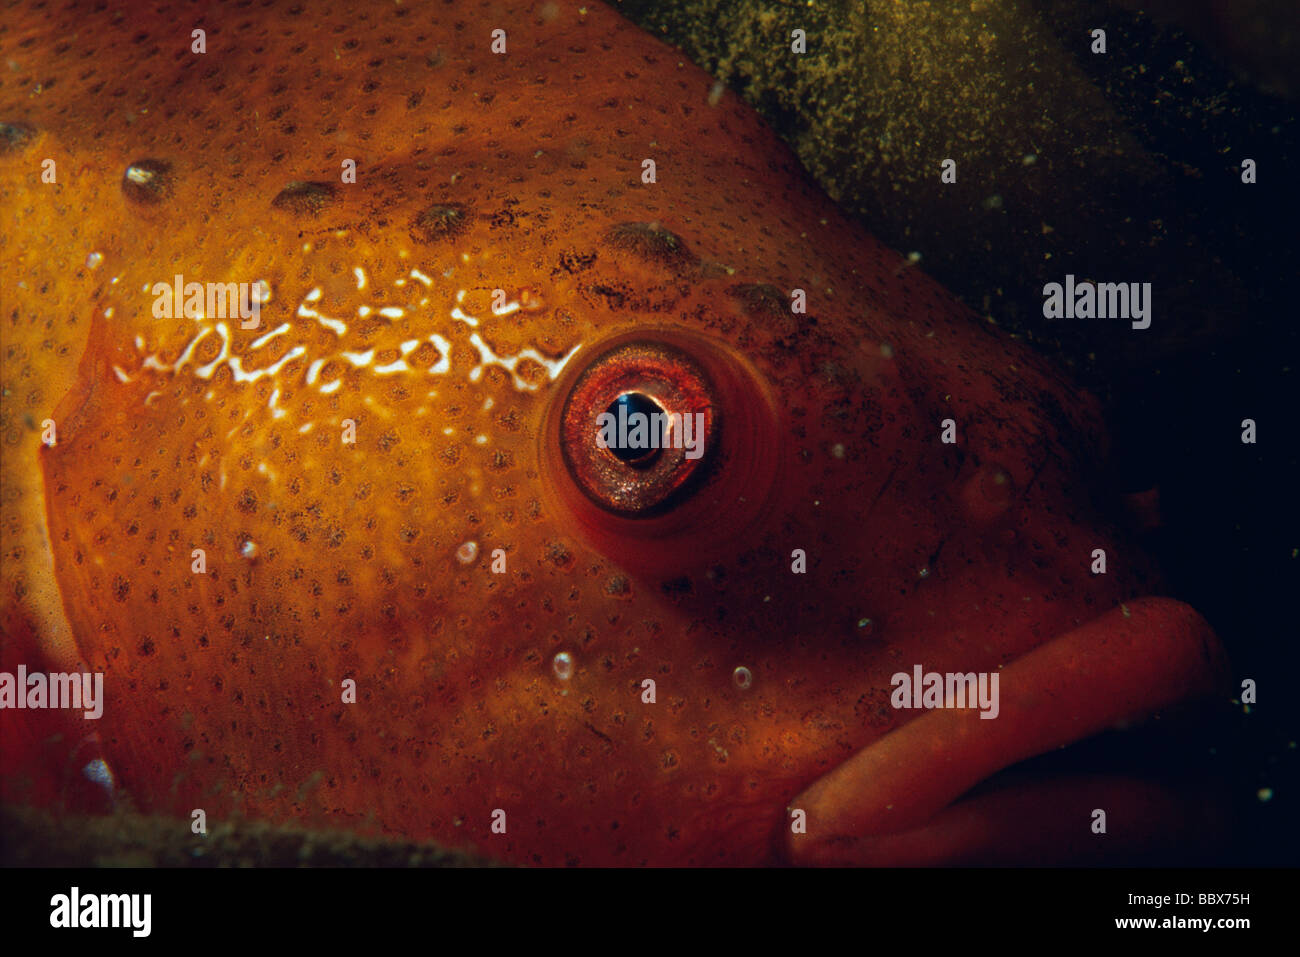 Fish close-up Stock Photo